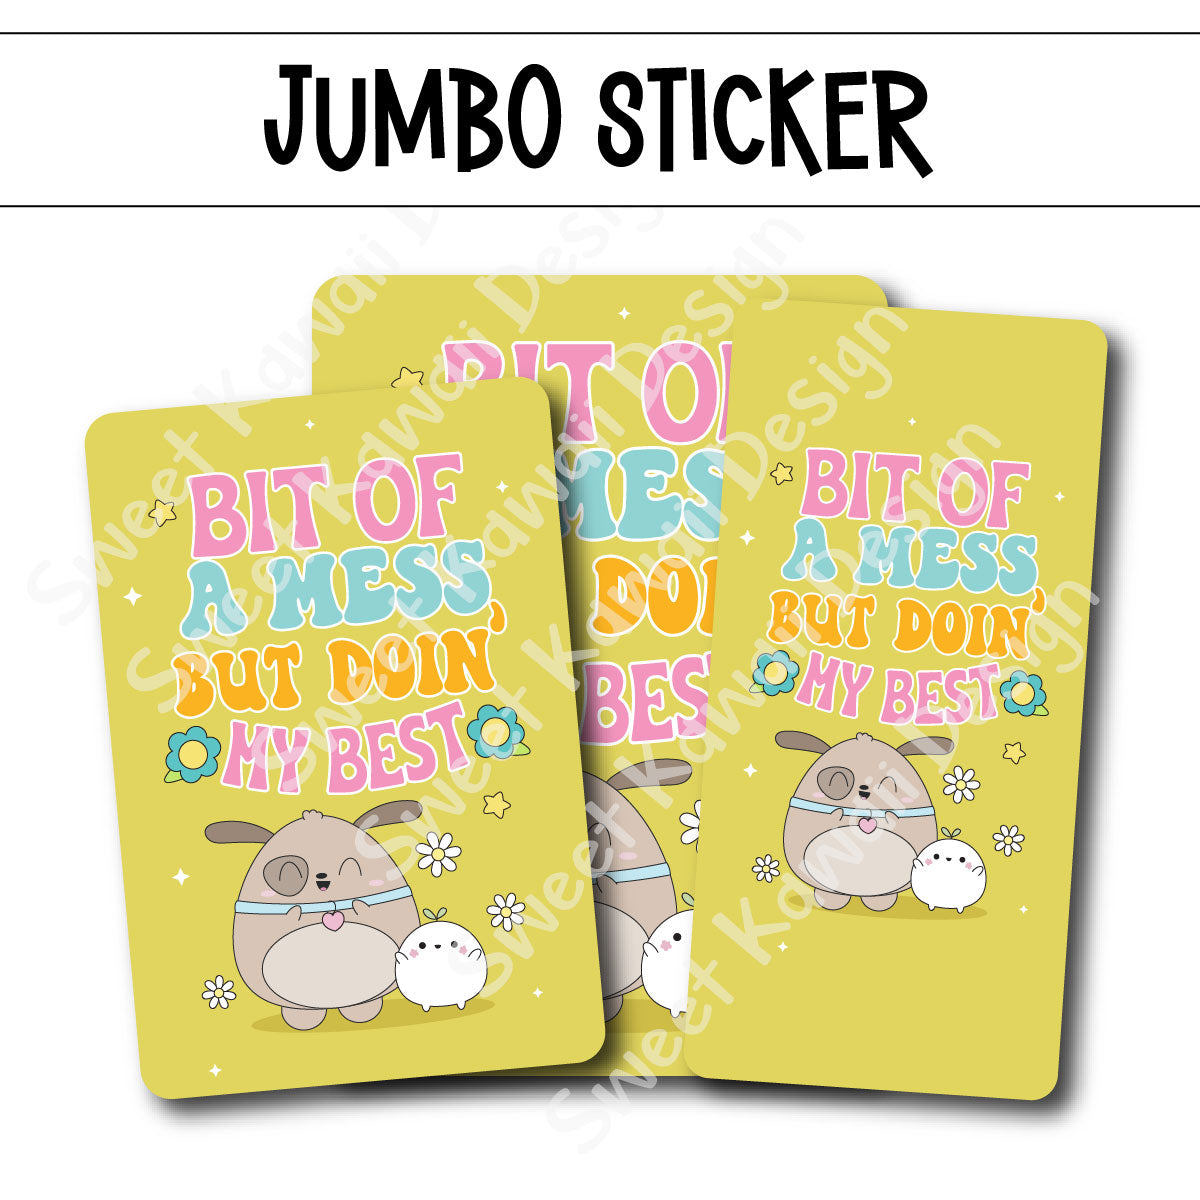 Kawaii Jumbo Sticker - Bit of a mess - Size Options Available